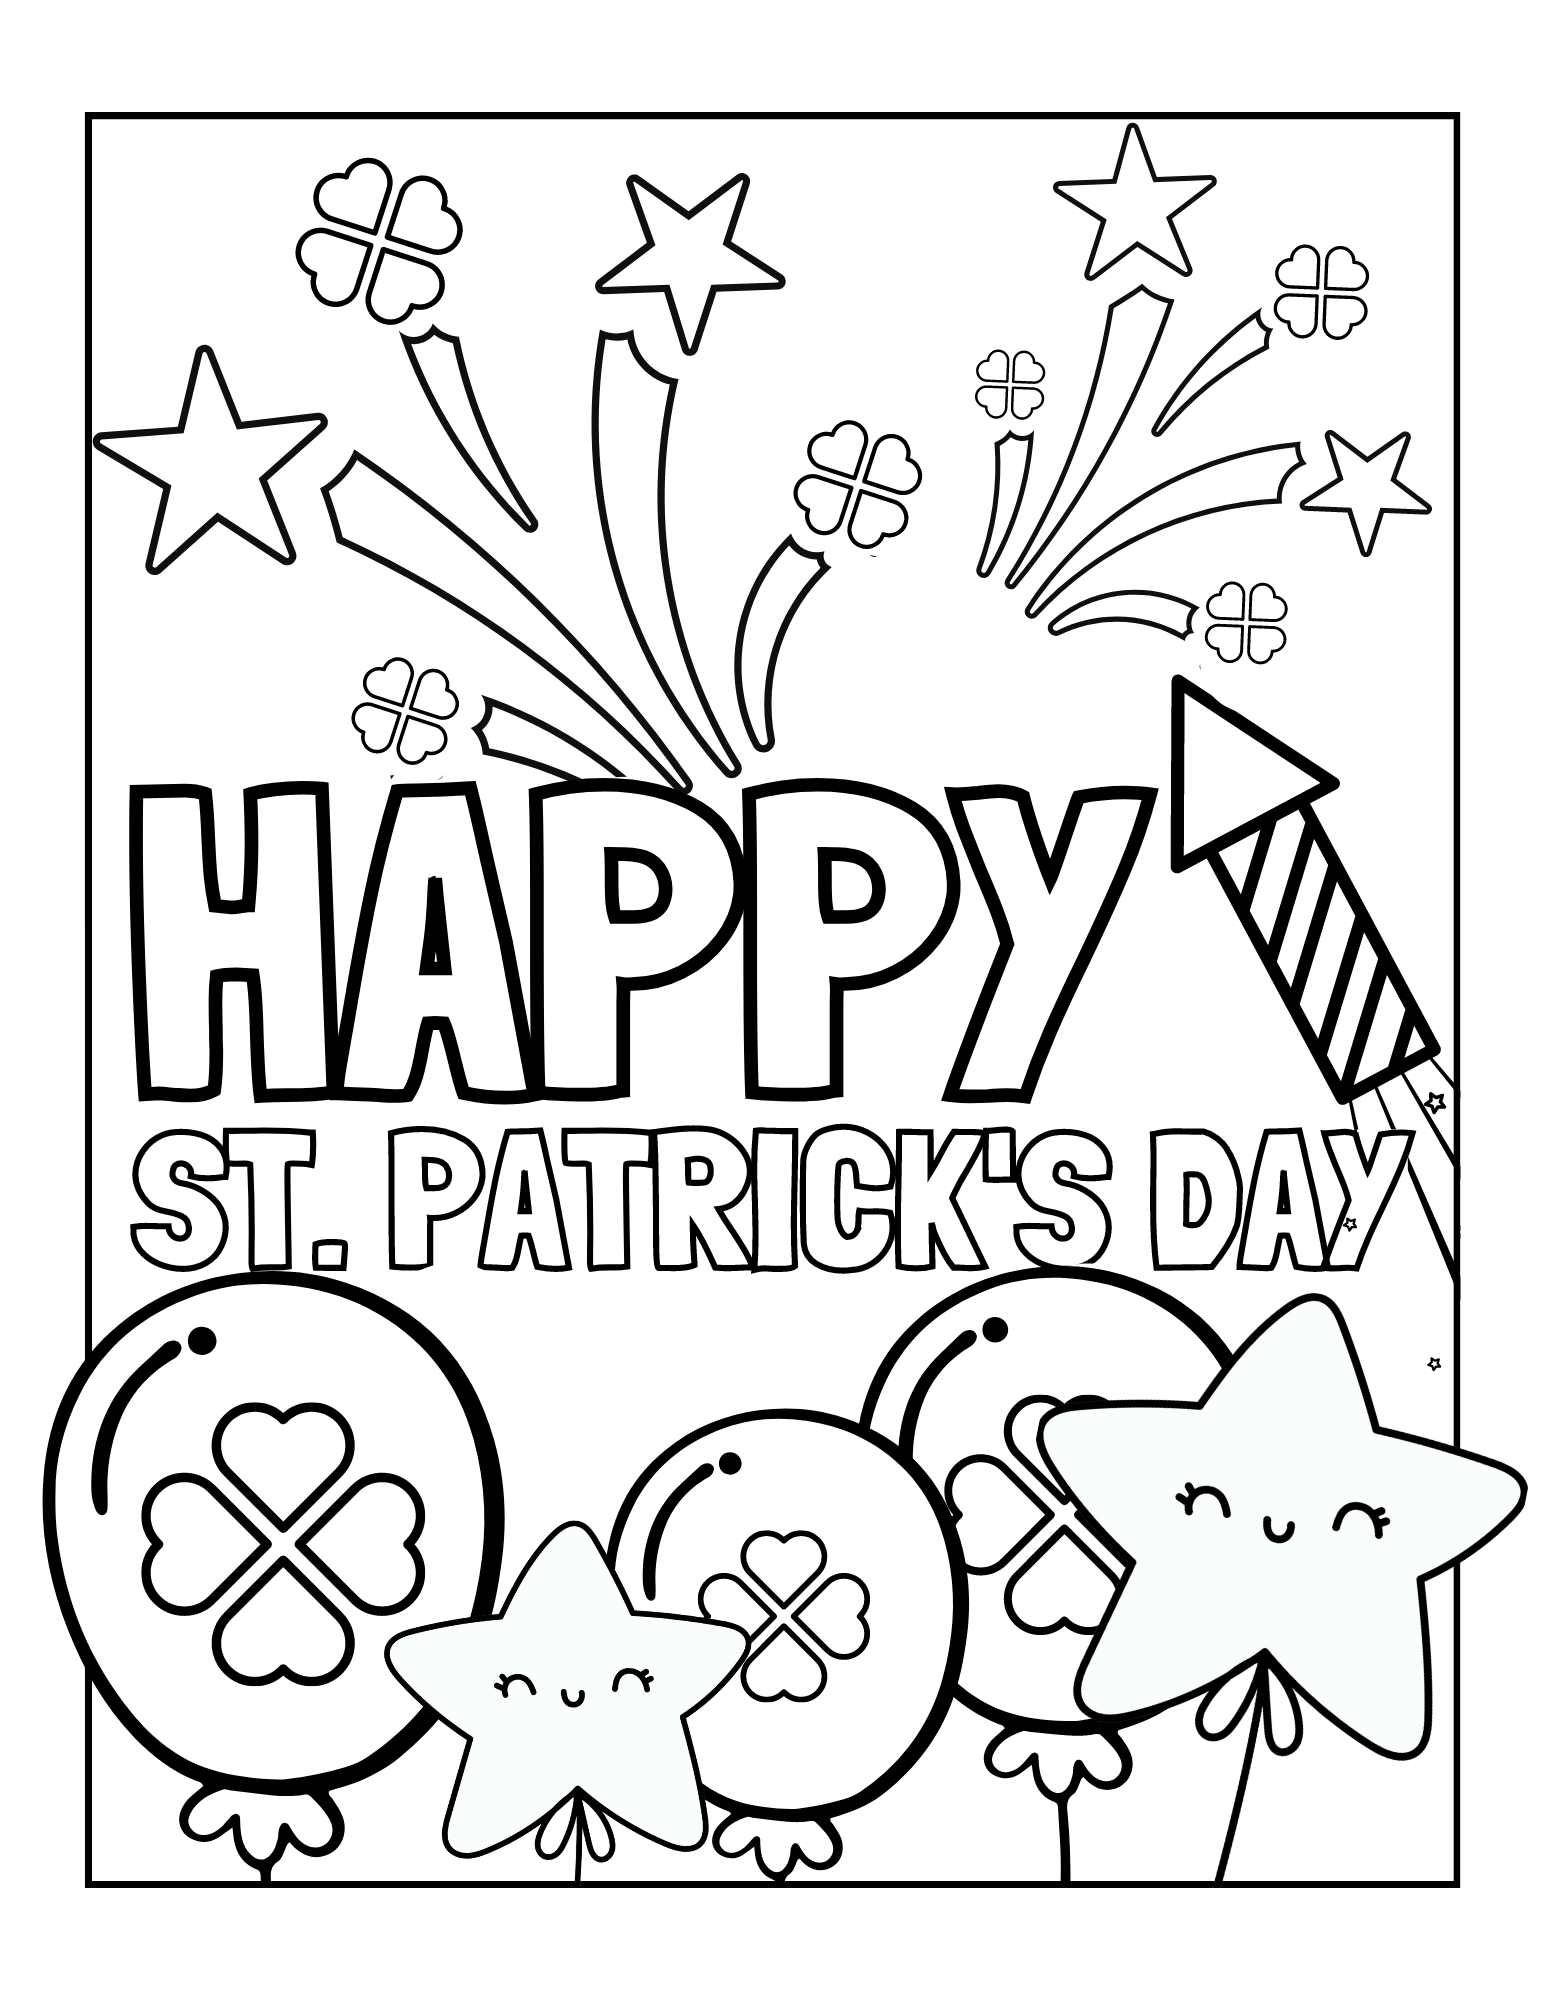 St patricks day coloring sheets free â